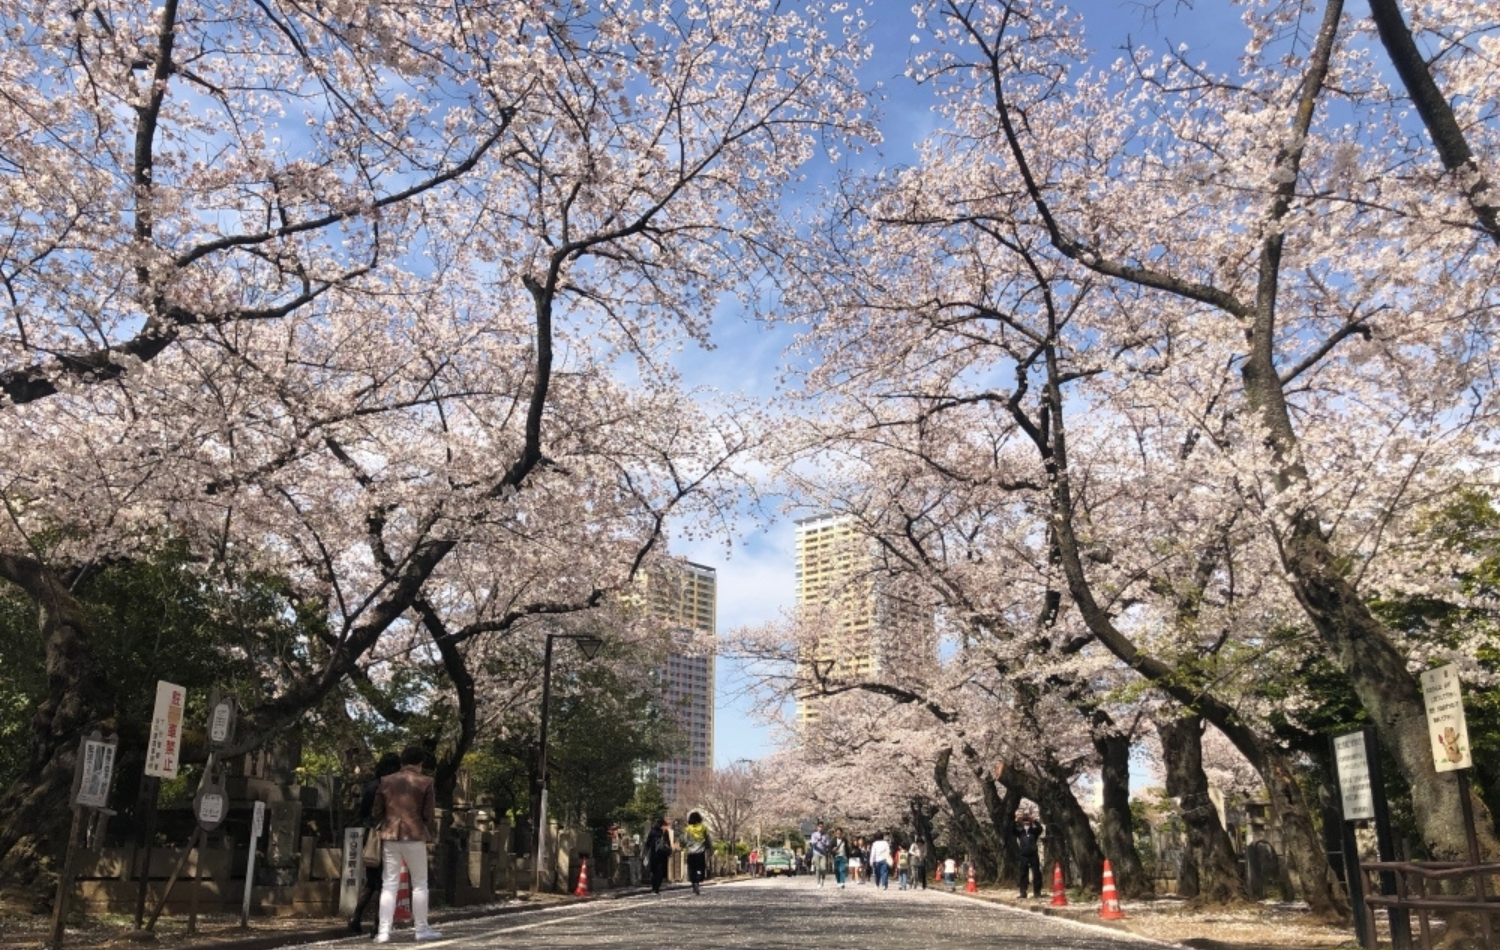 tourhub | Vio Travel | Highlights of Japan on a Budget - 8 Days 